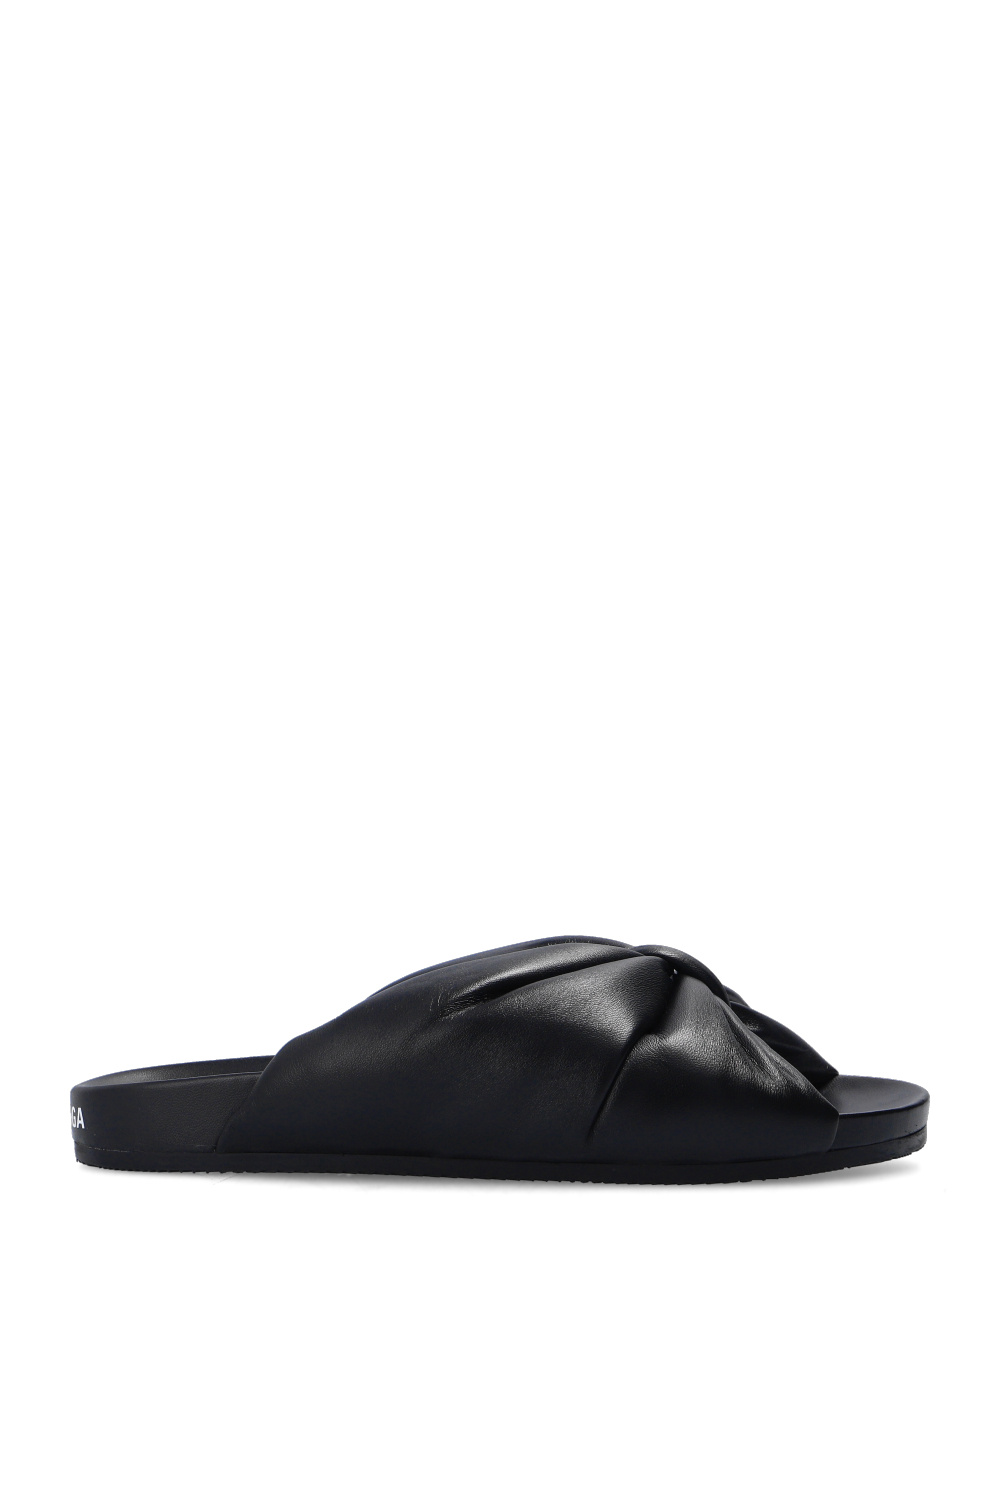 Balenciaga 'Puffy' leather slides | Women's Shoes | Vitkac